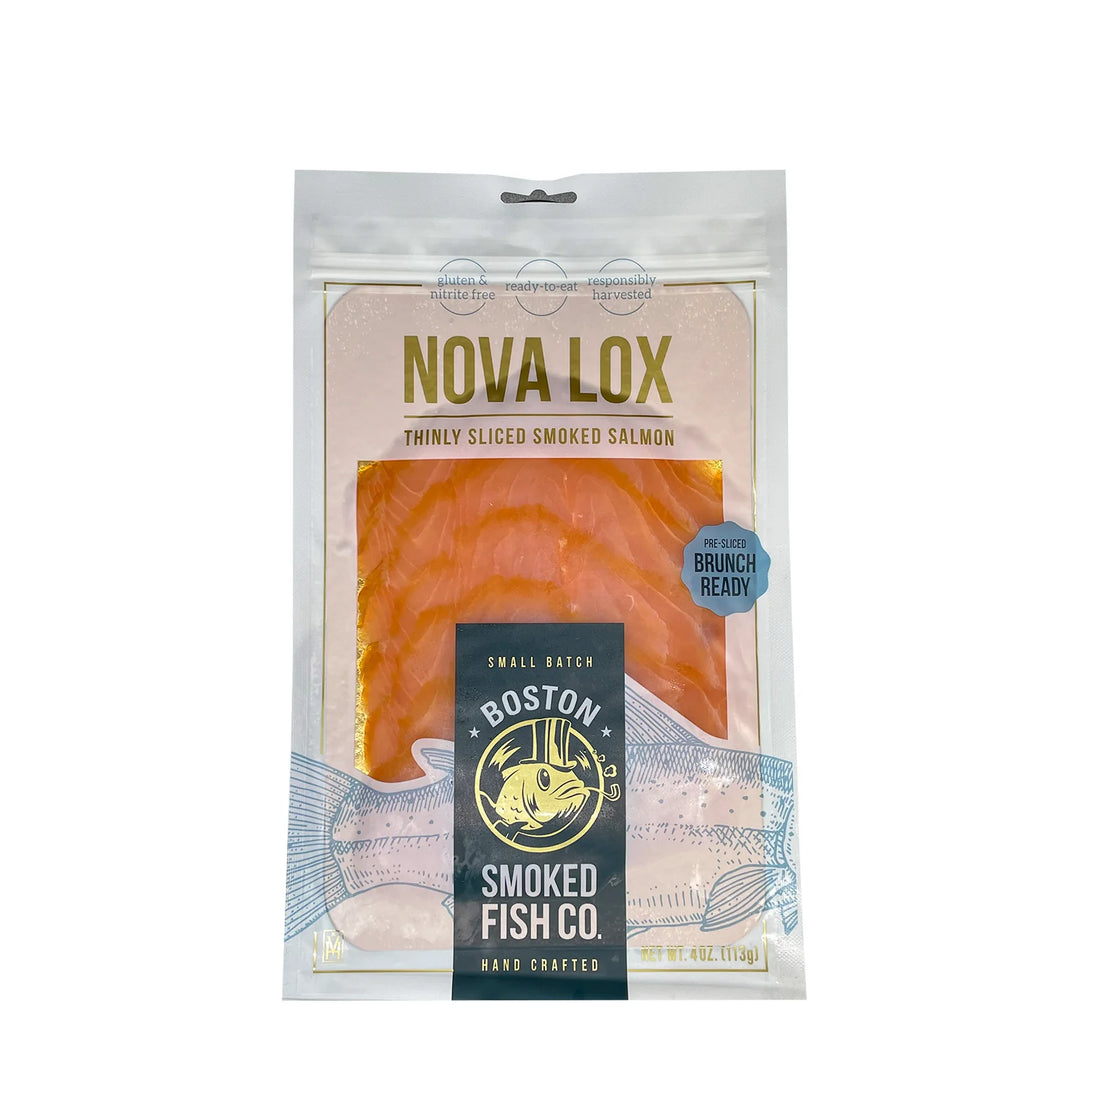 Nova Lox - Boston Smoked Fish